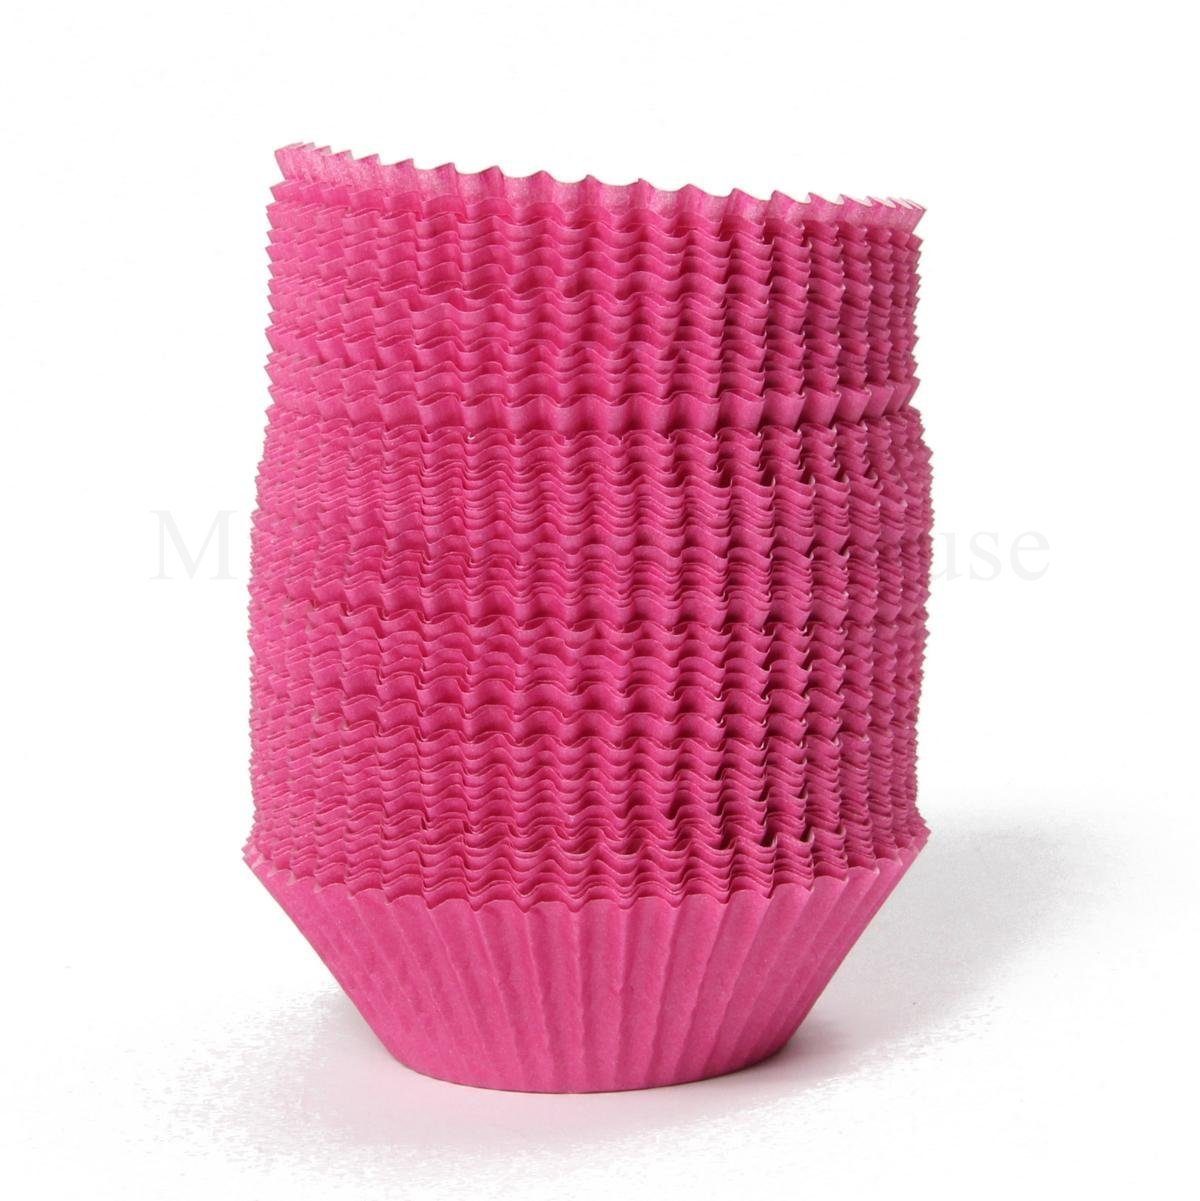 mm Ø Standardgröße, (Pink Muffinform 50 75-tlg), mm, Miss Bakery's x House Papierbackförmchen backofenfest - 30